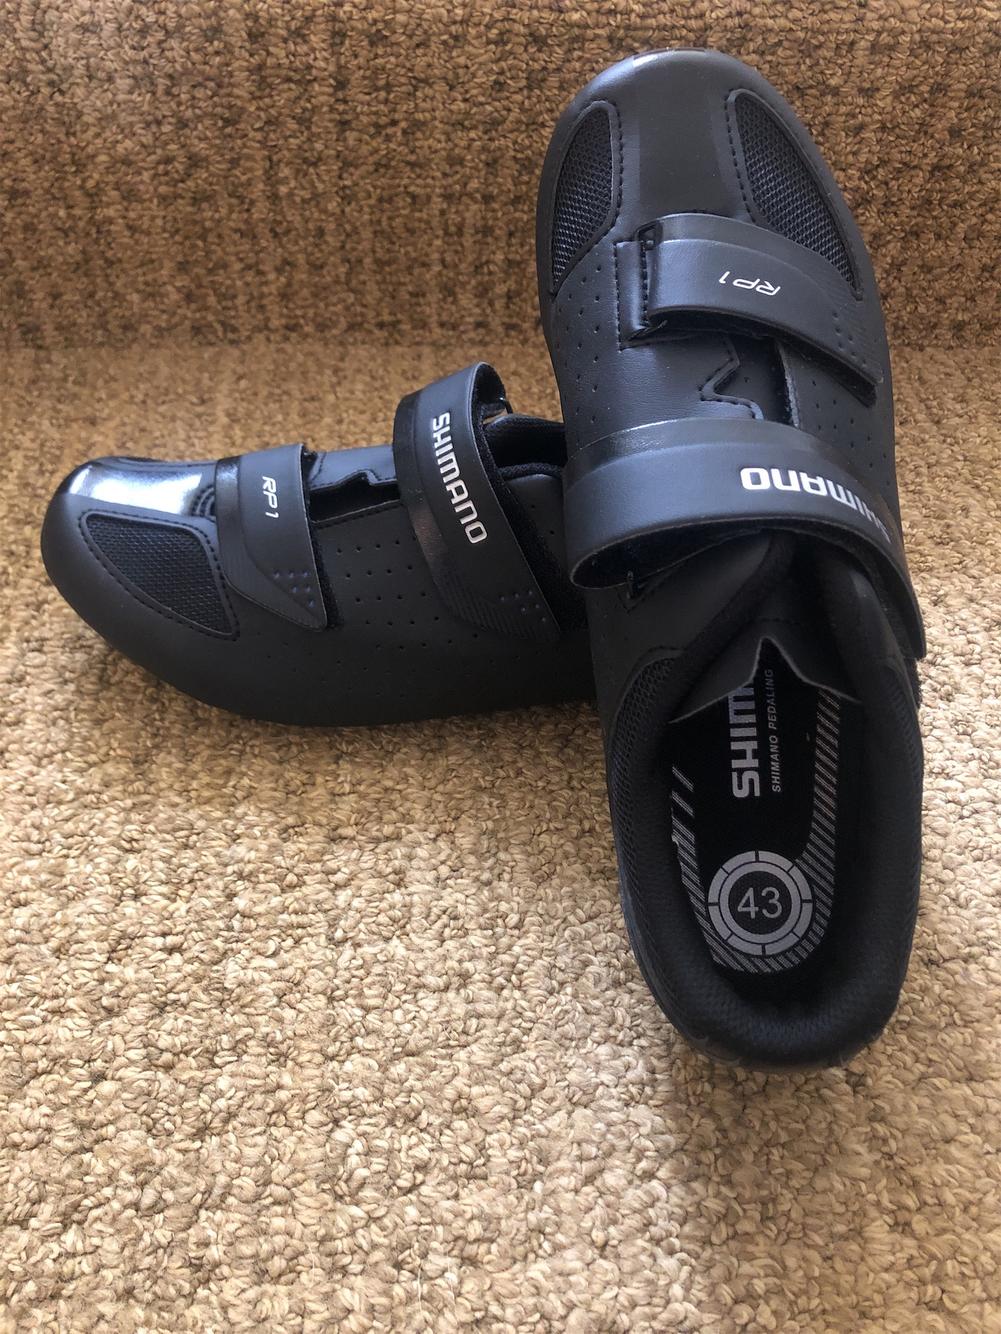 Shimano Rp100 Spd-sl Shoes Black Size EU 39 UK 6 for sale online 